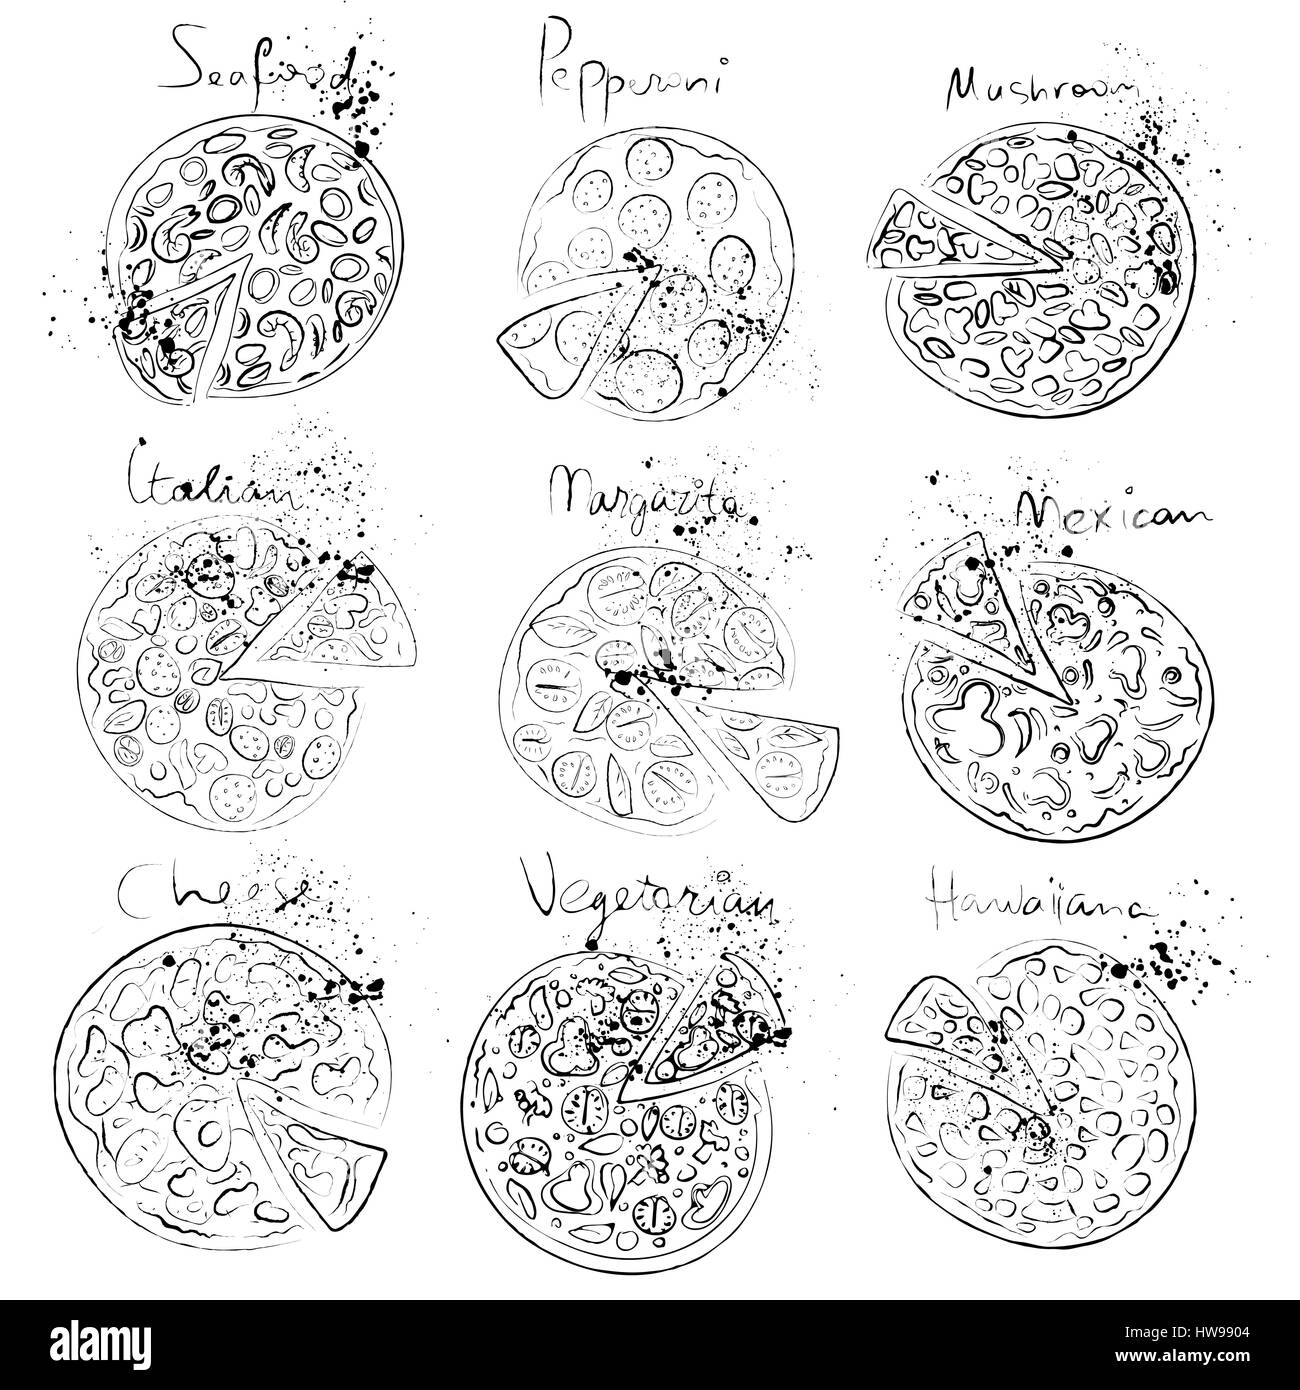 Jeu de pizza slice - italien, mexicain, margarita, fromage, pepperoni Illustration de Vecteur